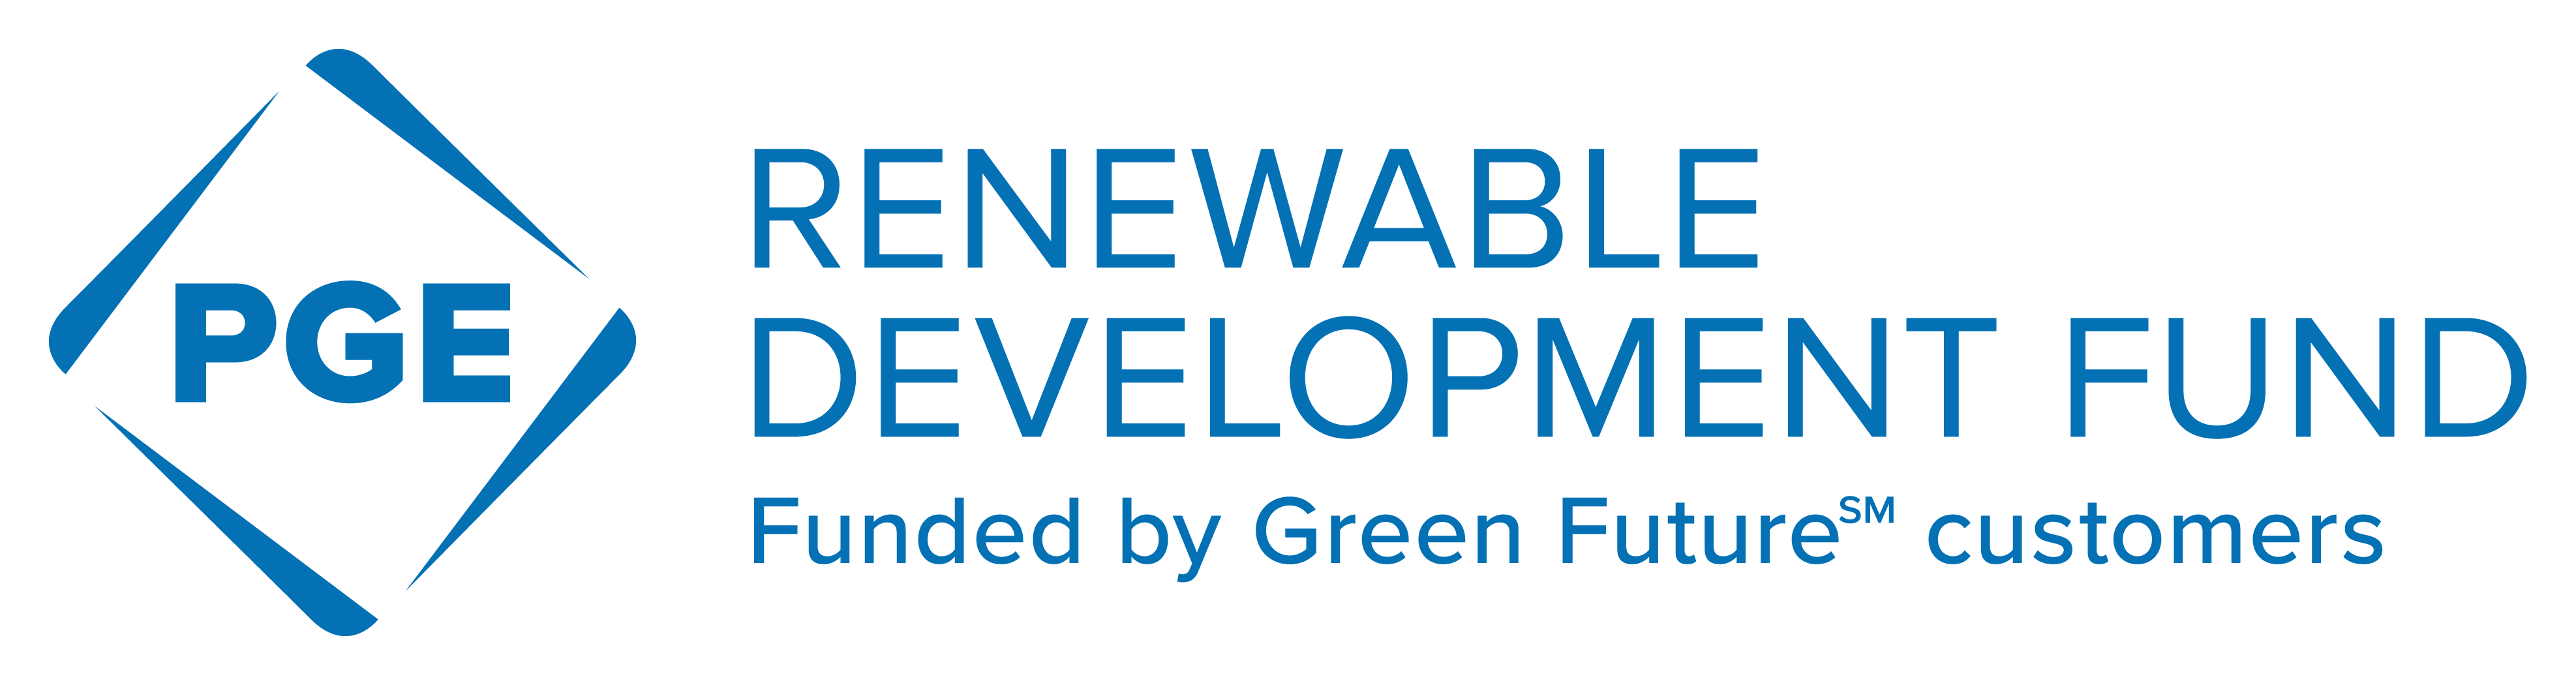 PGE Renewable Development Fund Logo